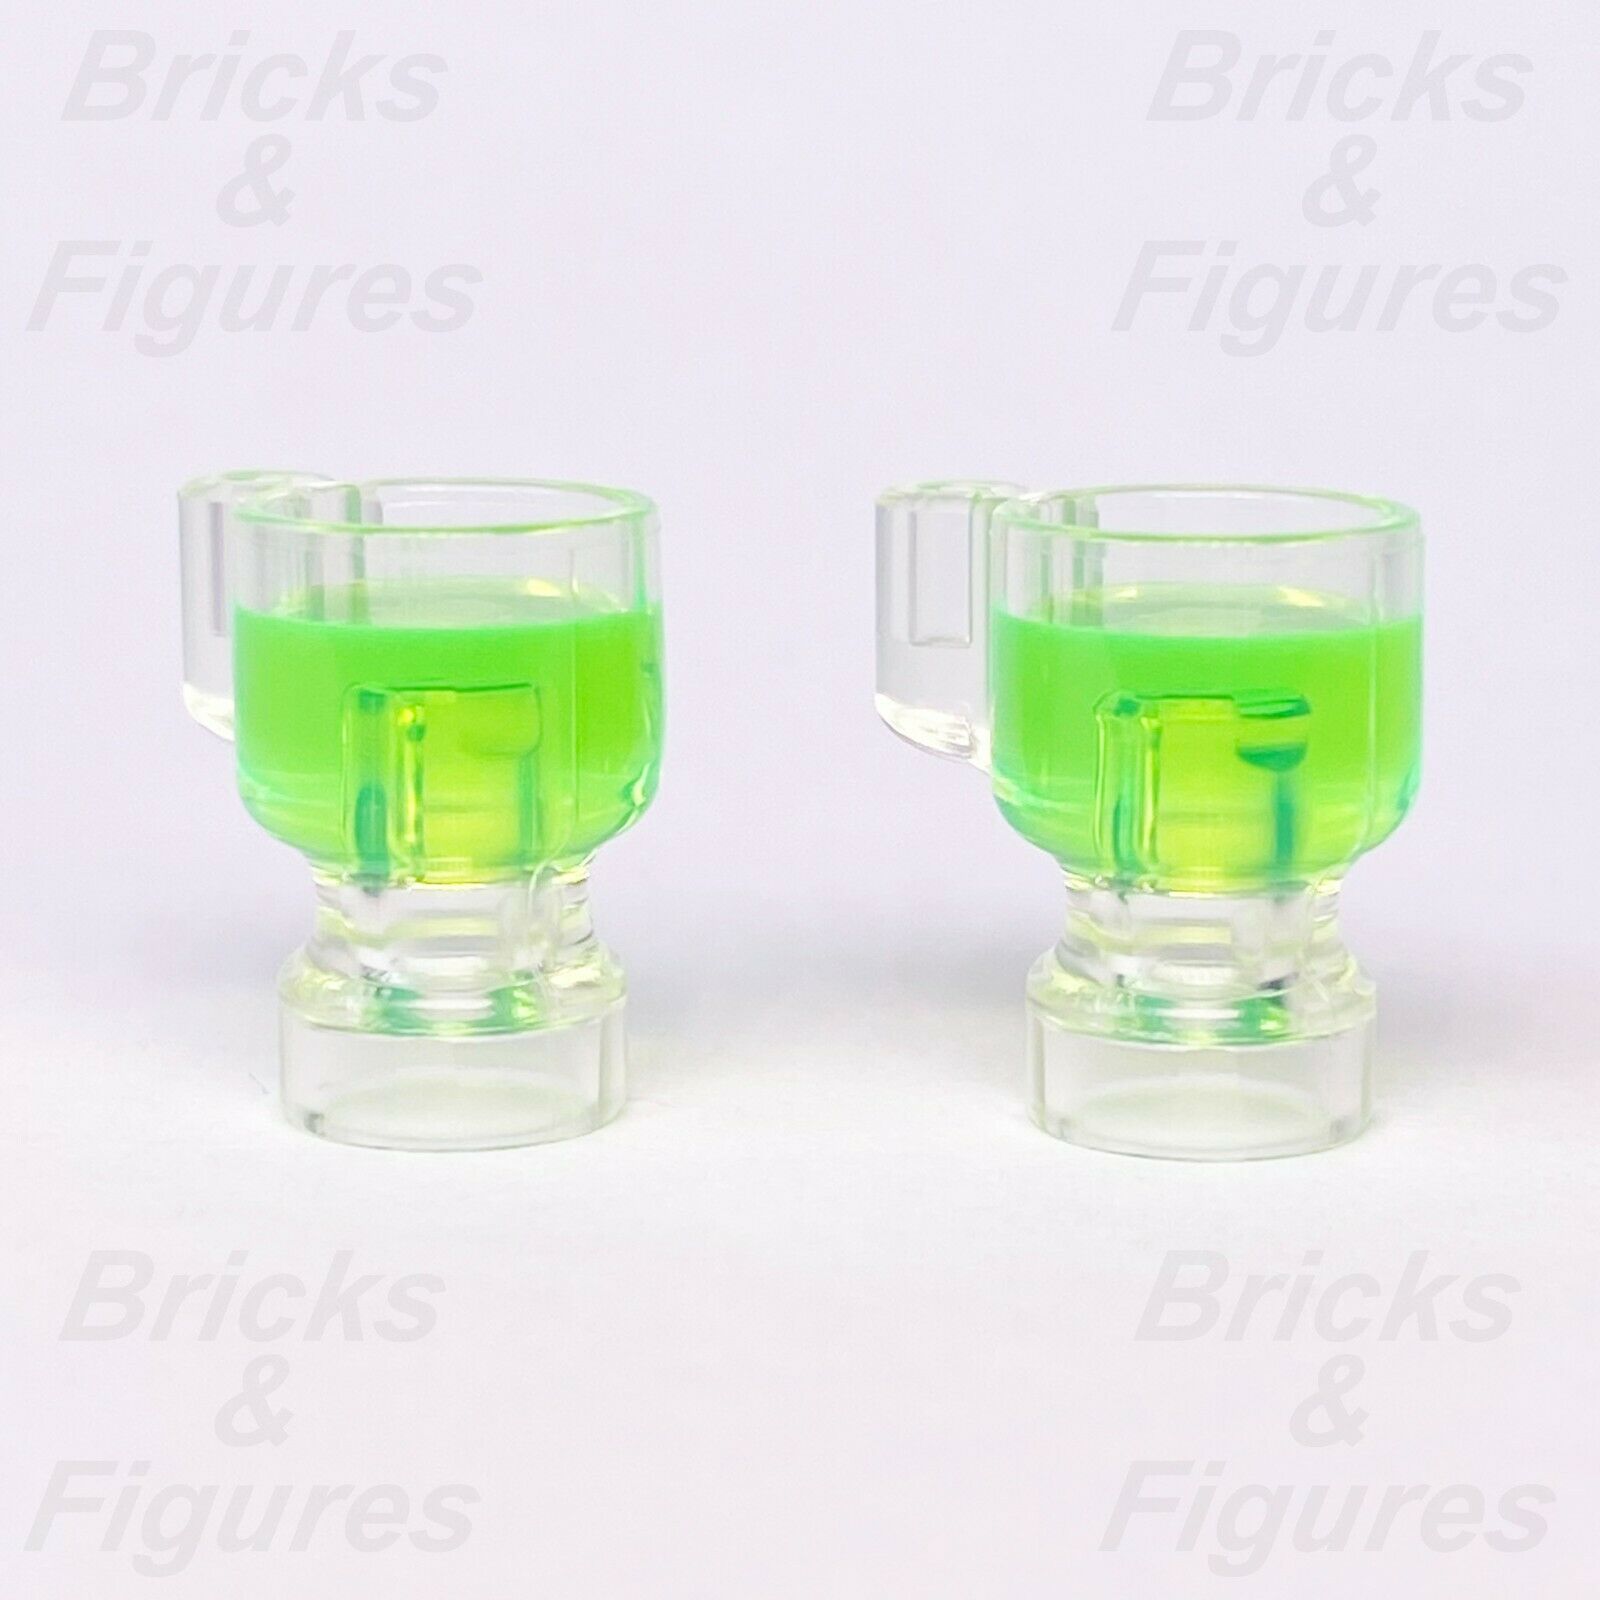 2 x Harry Potter LEGO Stein Cup Drink Pattern Green Minifigure Part 76386 - Bricks & Figures